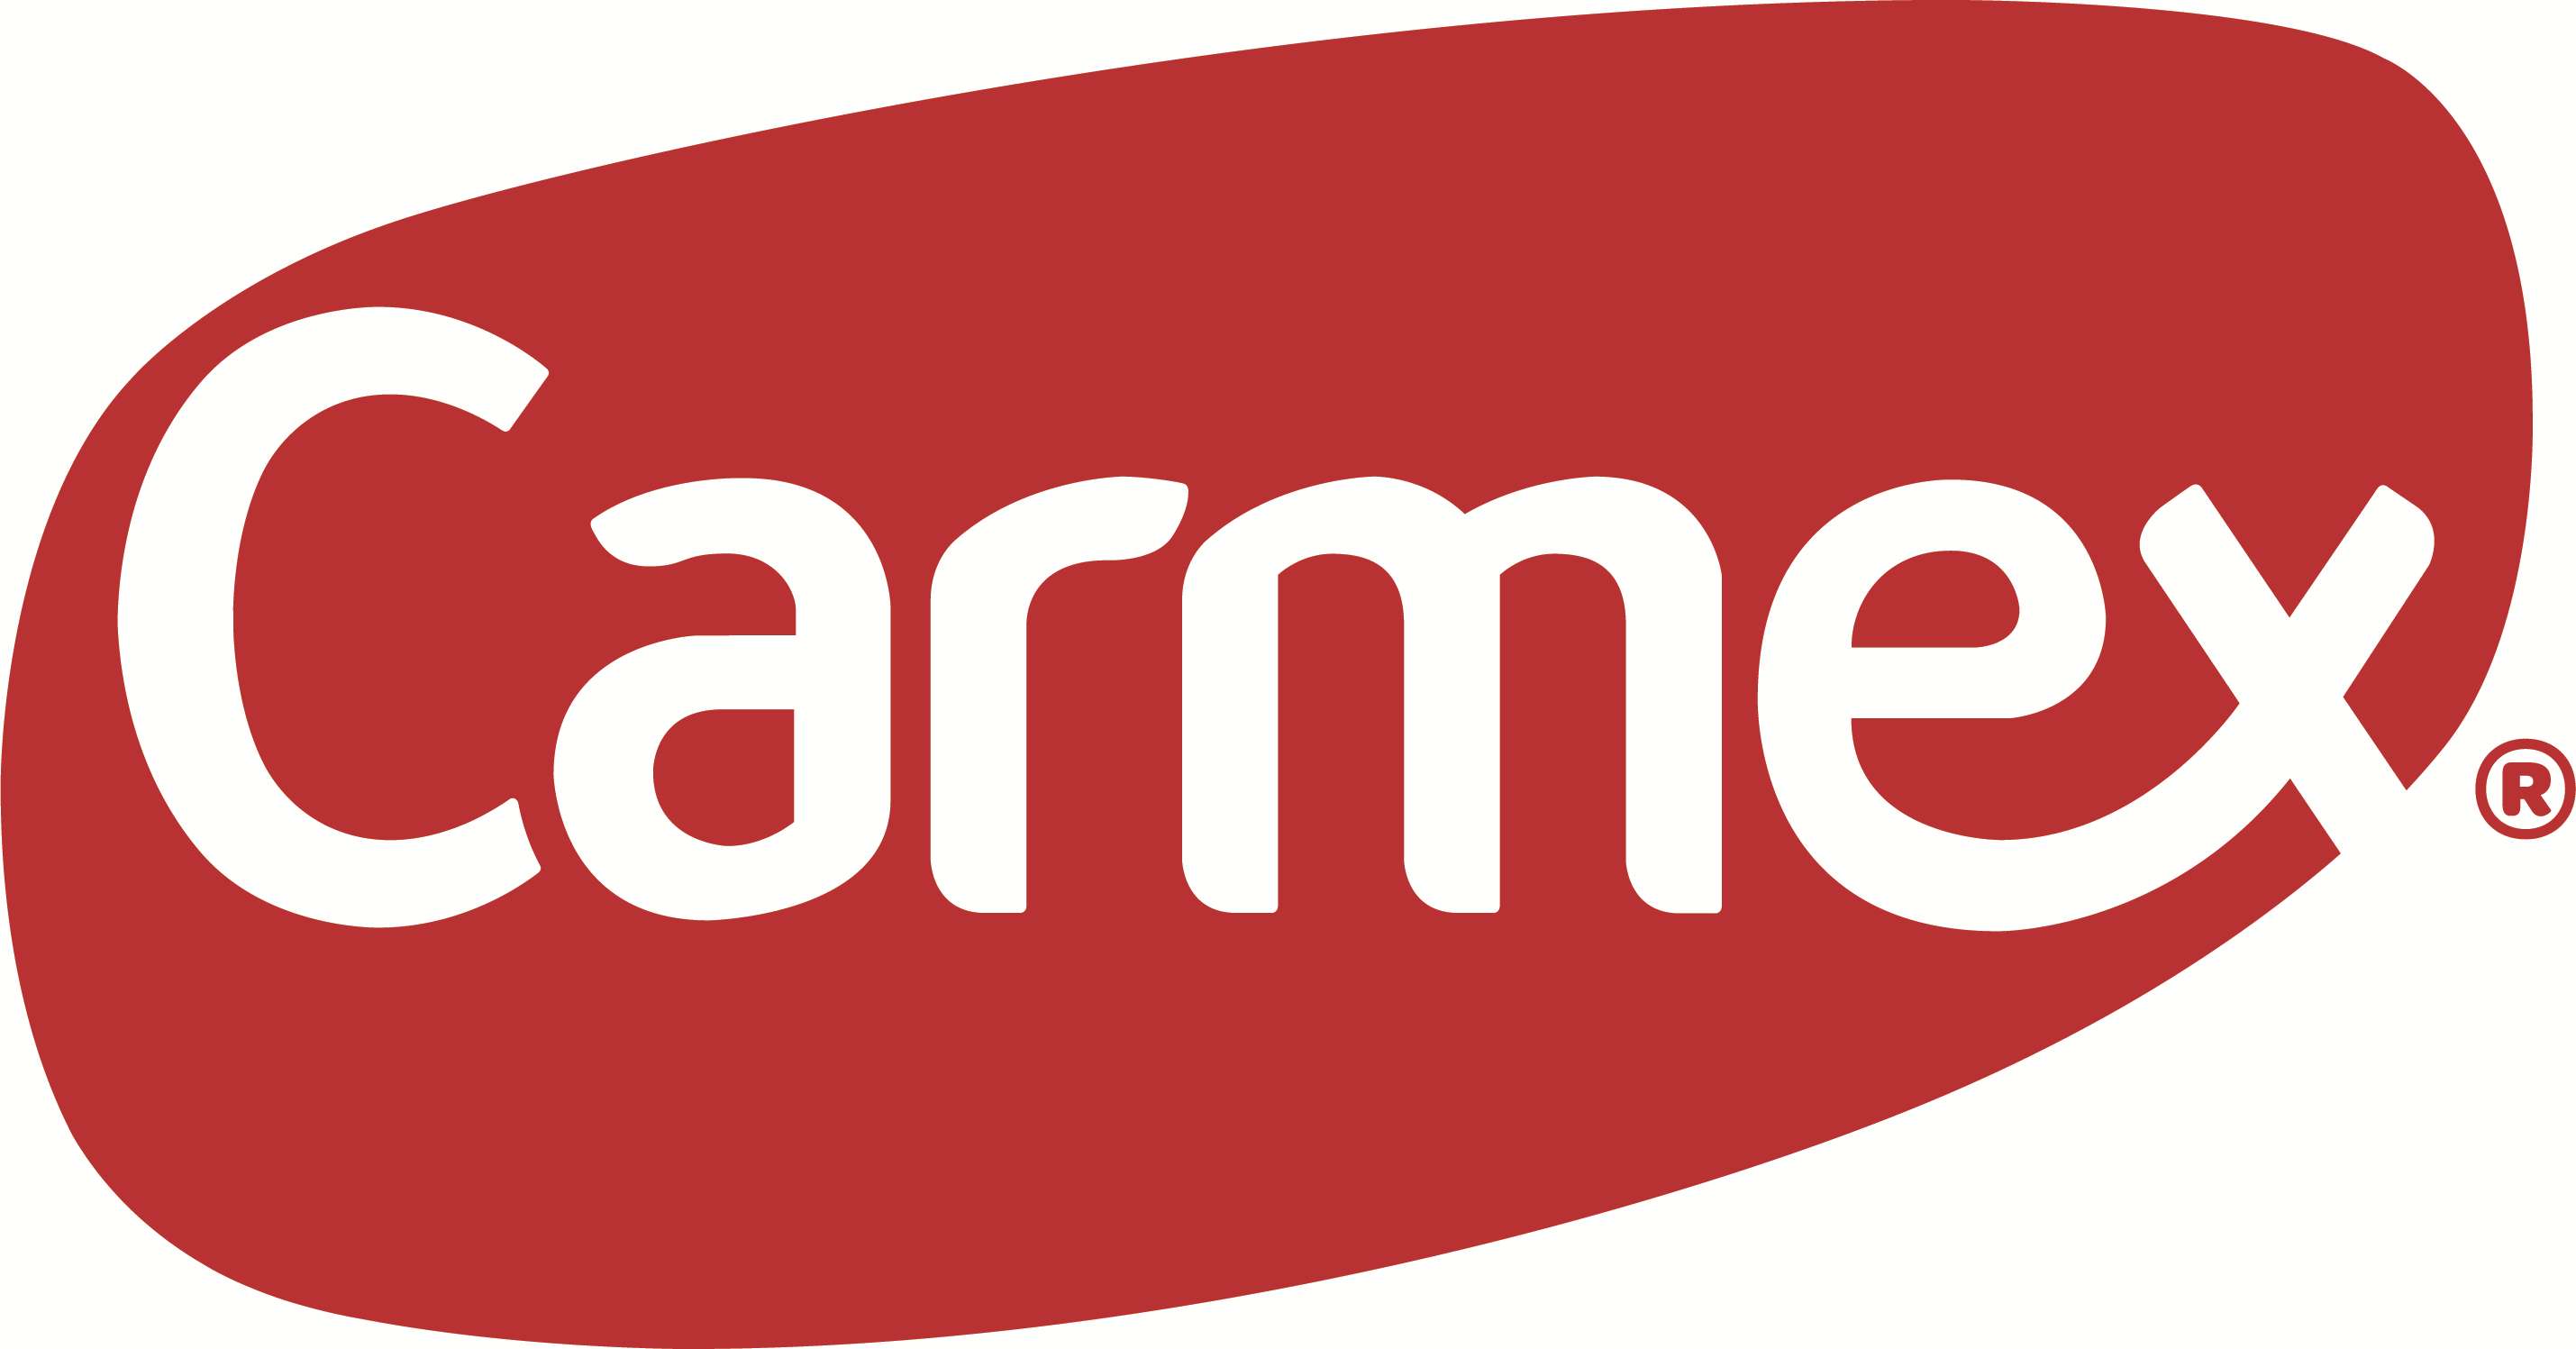 Carma Laboratories, Inc. logo